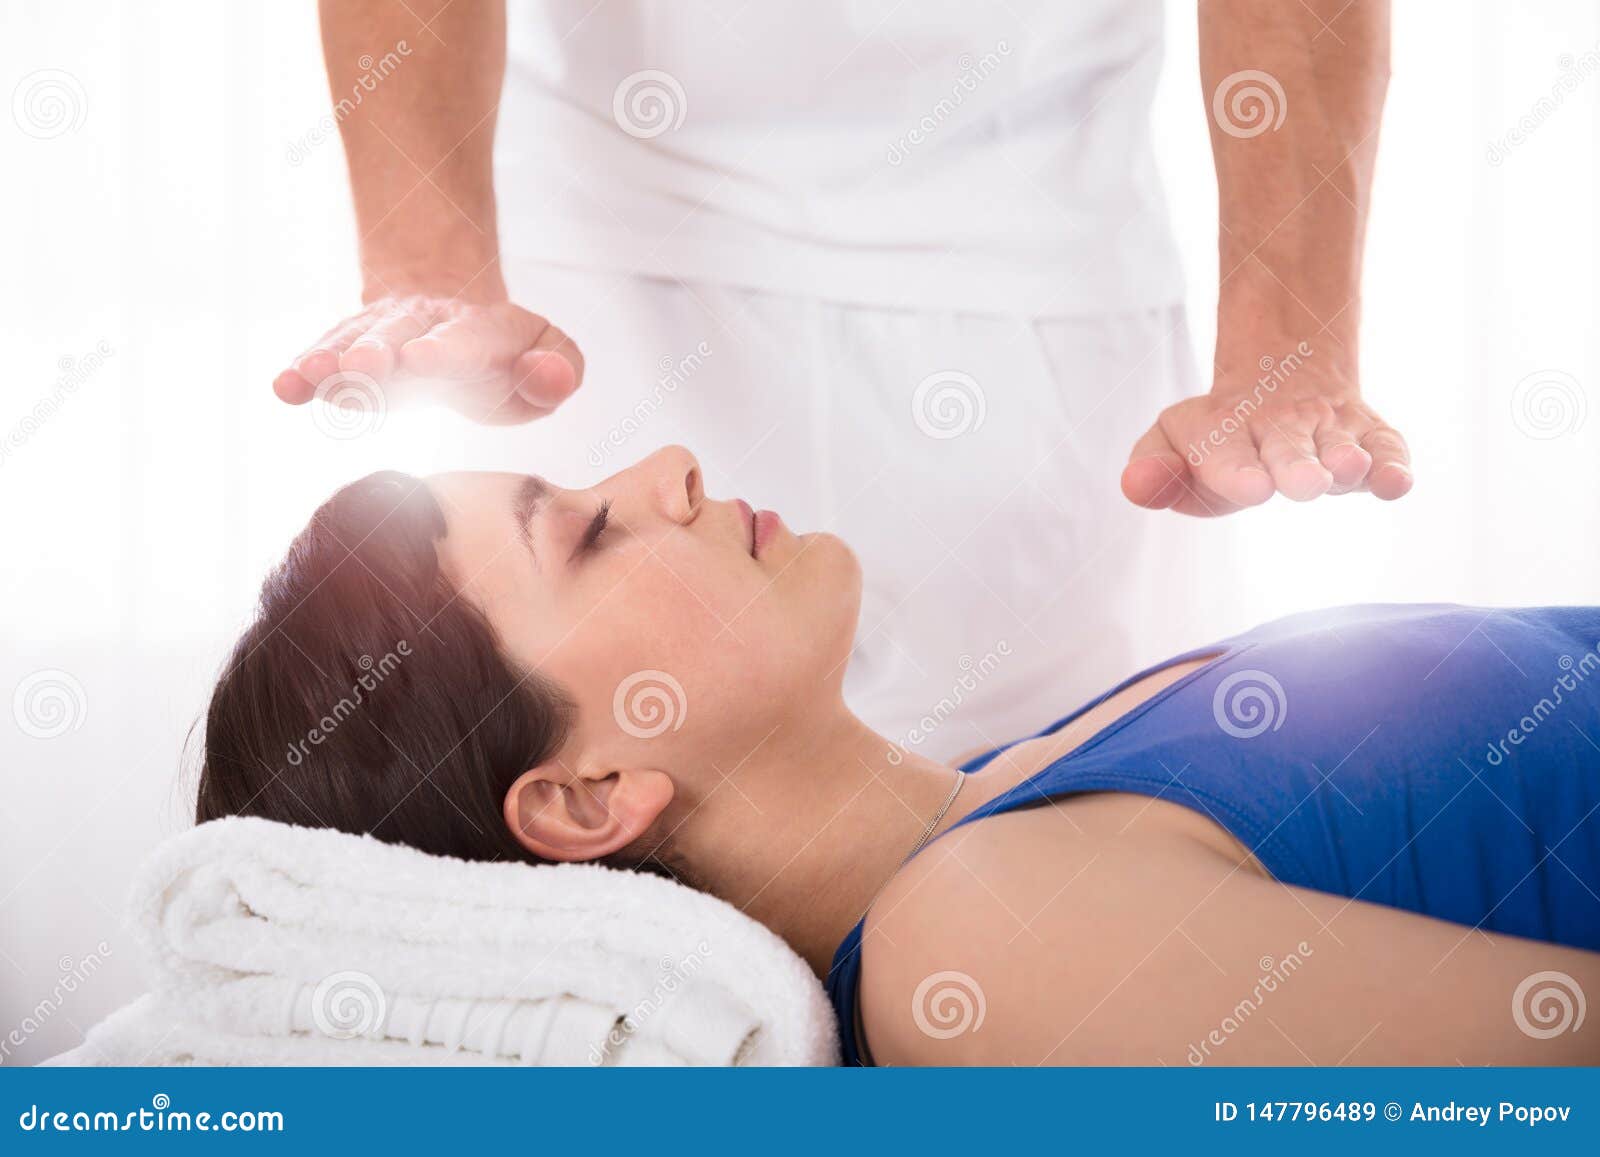 woman having reiki healing treatment